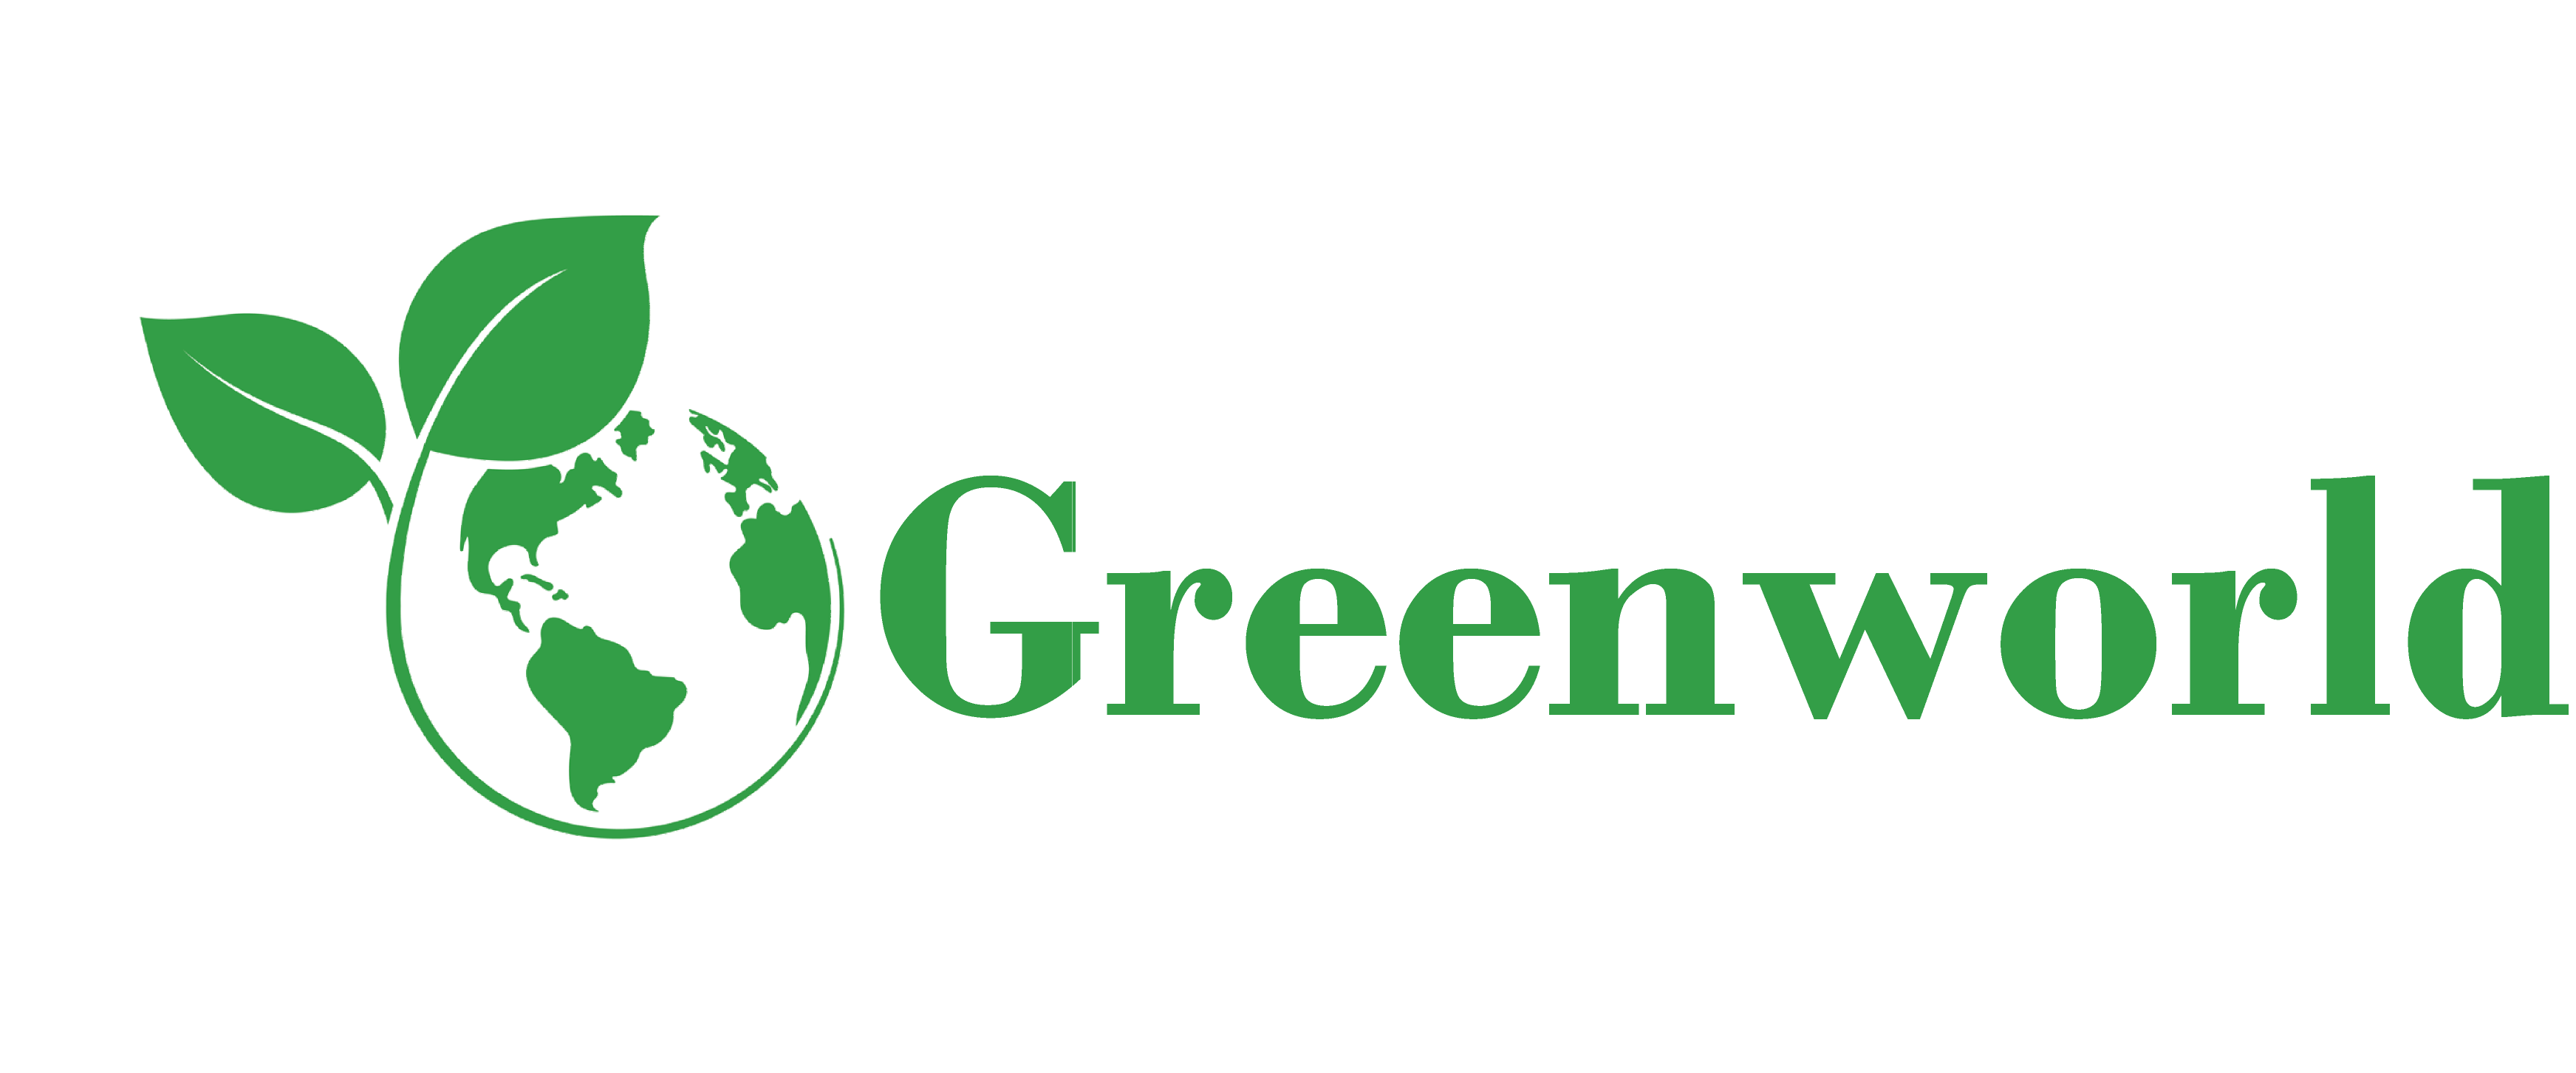 Greenworld Co. Ltd